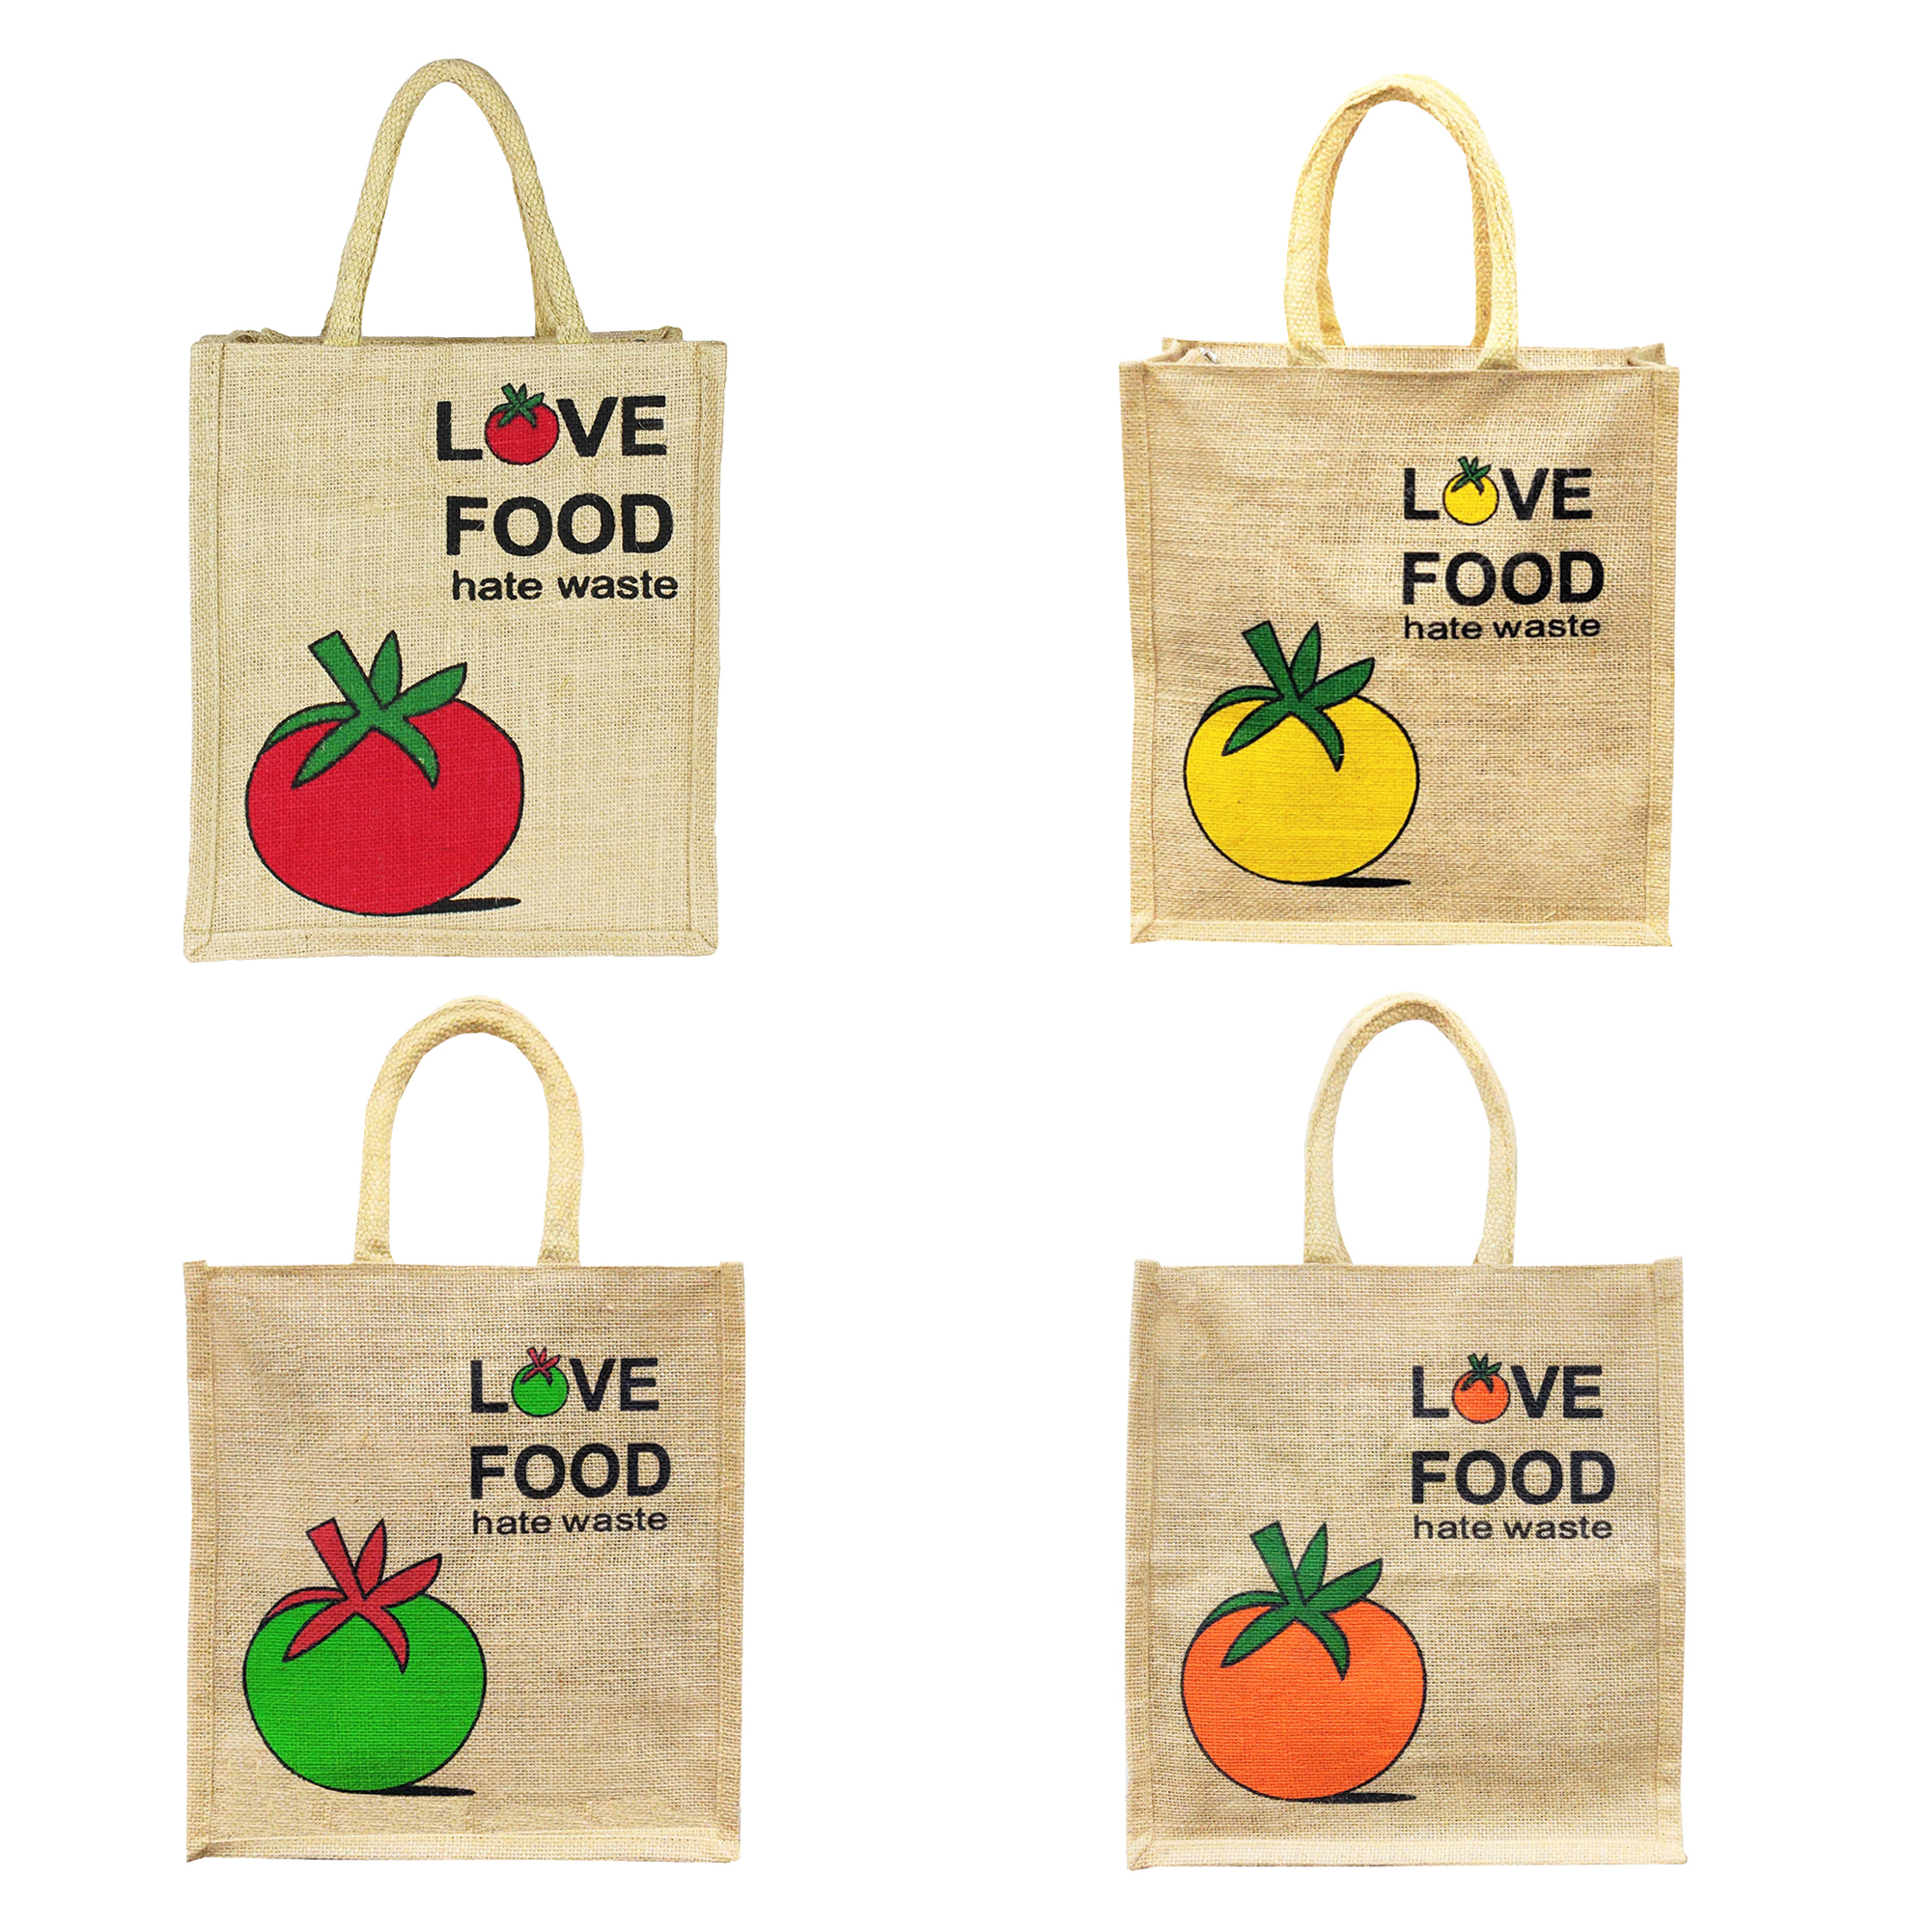 Love Food - Buy Jute Bags Online in India - www.semadata.org